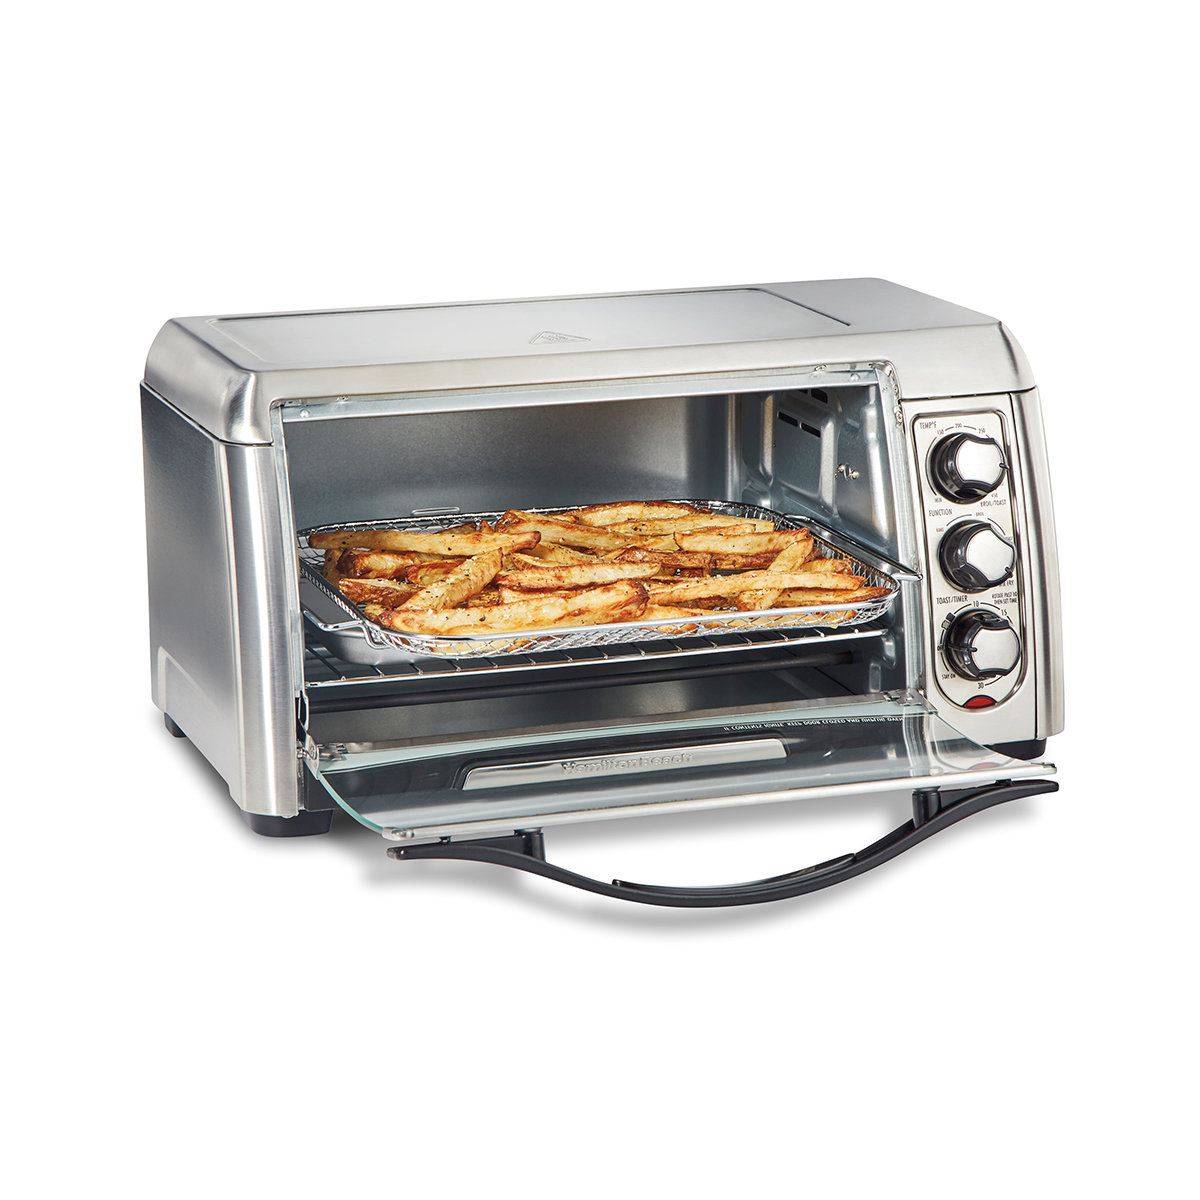 Hamilton Beach Recertified Sure-Crisp® Air Fryer Toaster Oven